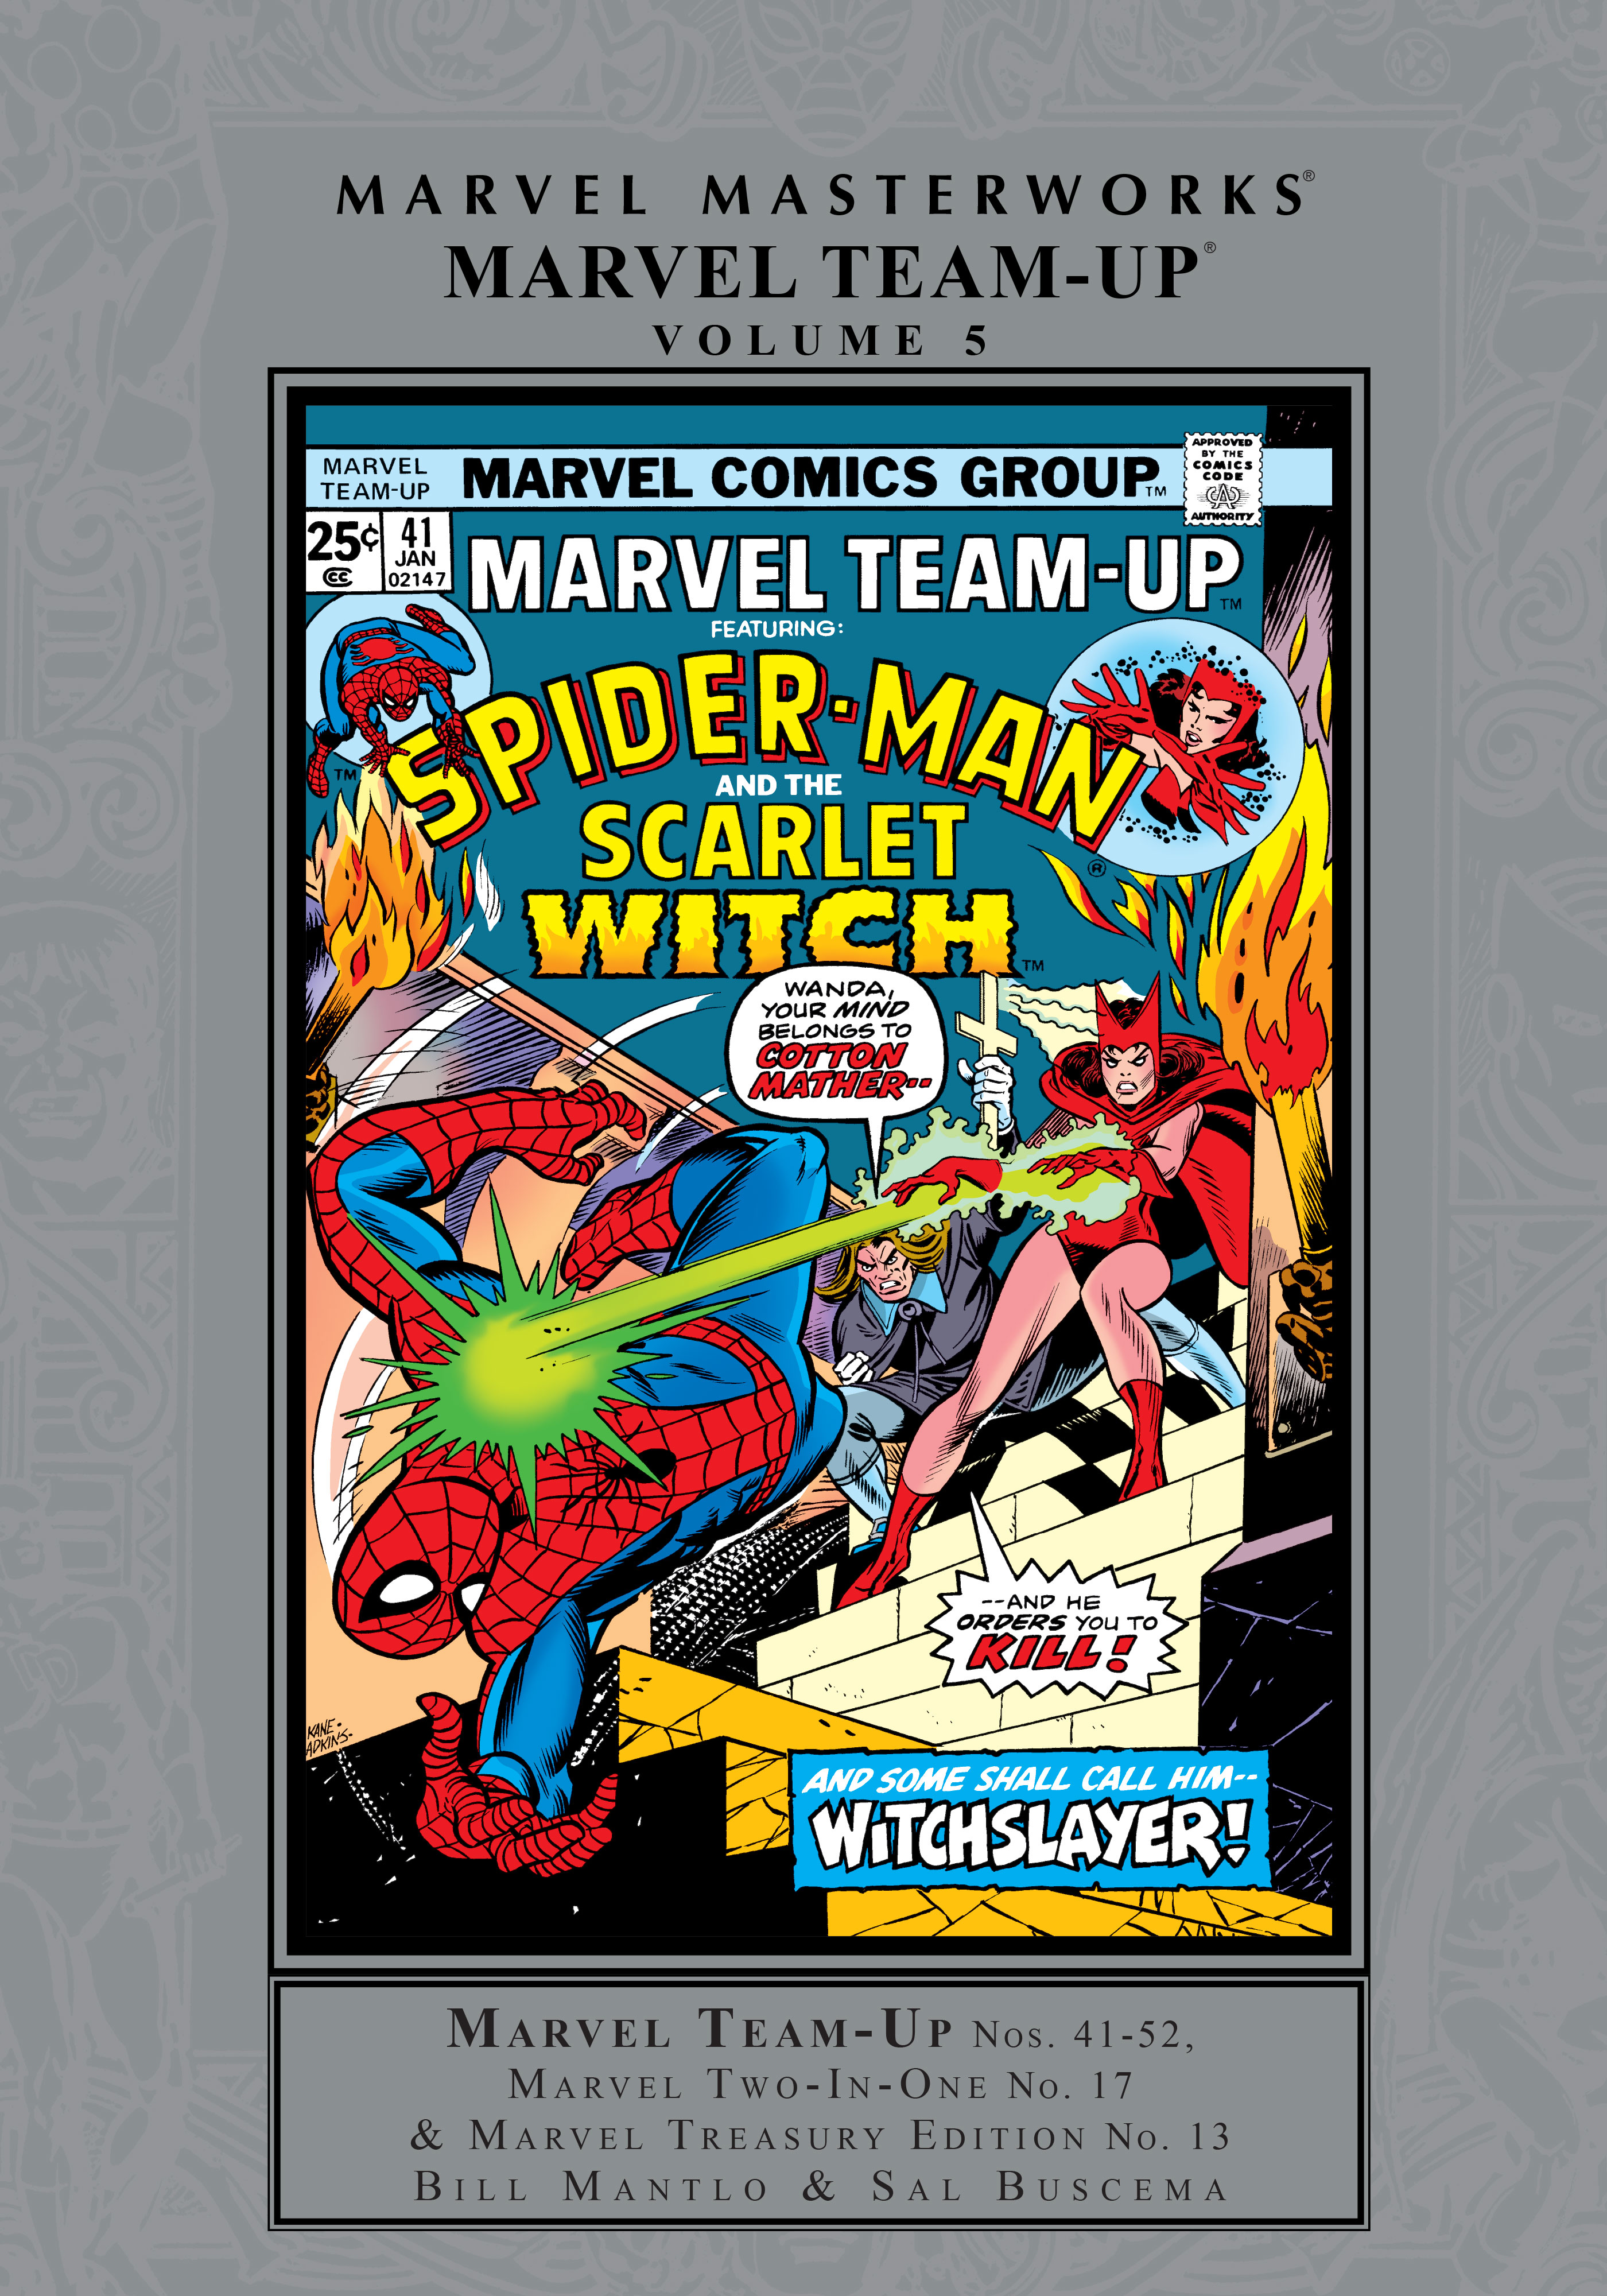 MARVEL MASTERWORKS MARVEL TEAMUP VOL. 5 HC (Hardcover) Comic Issues